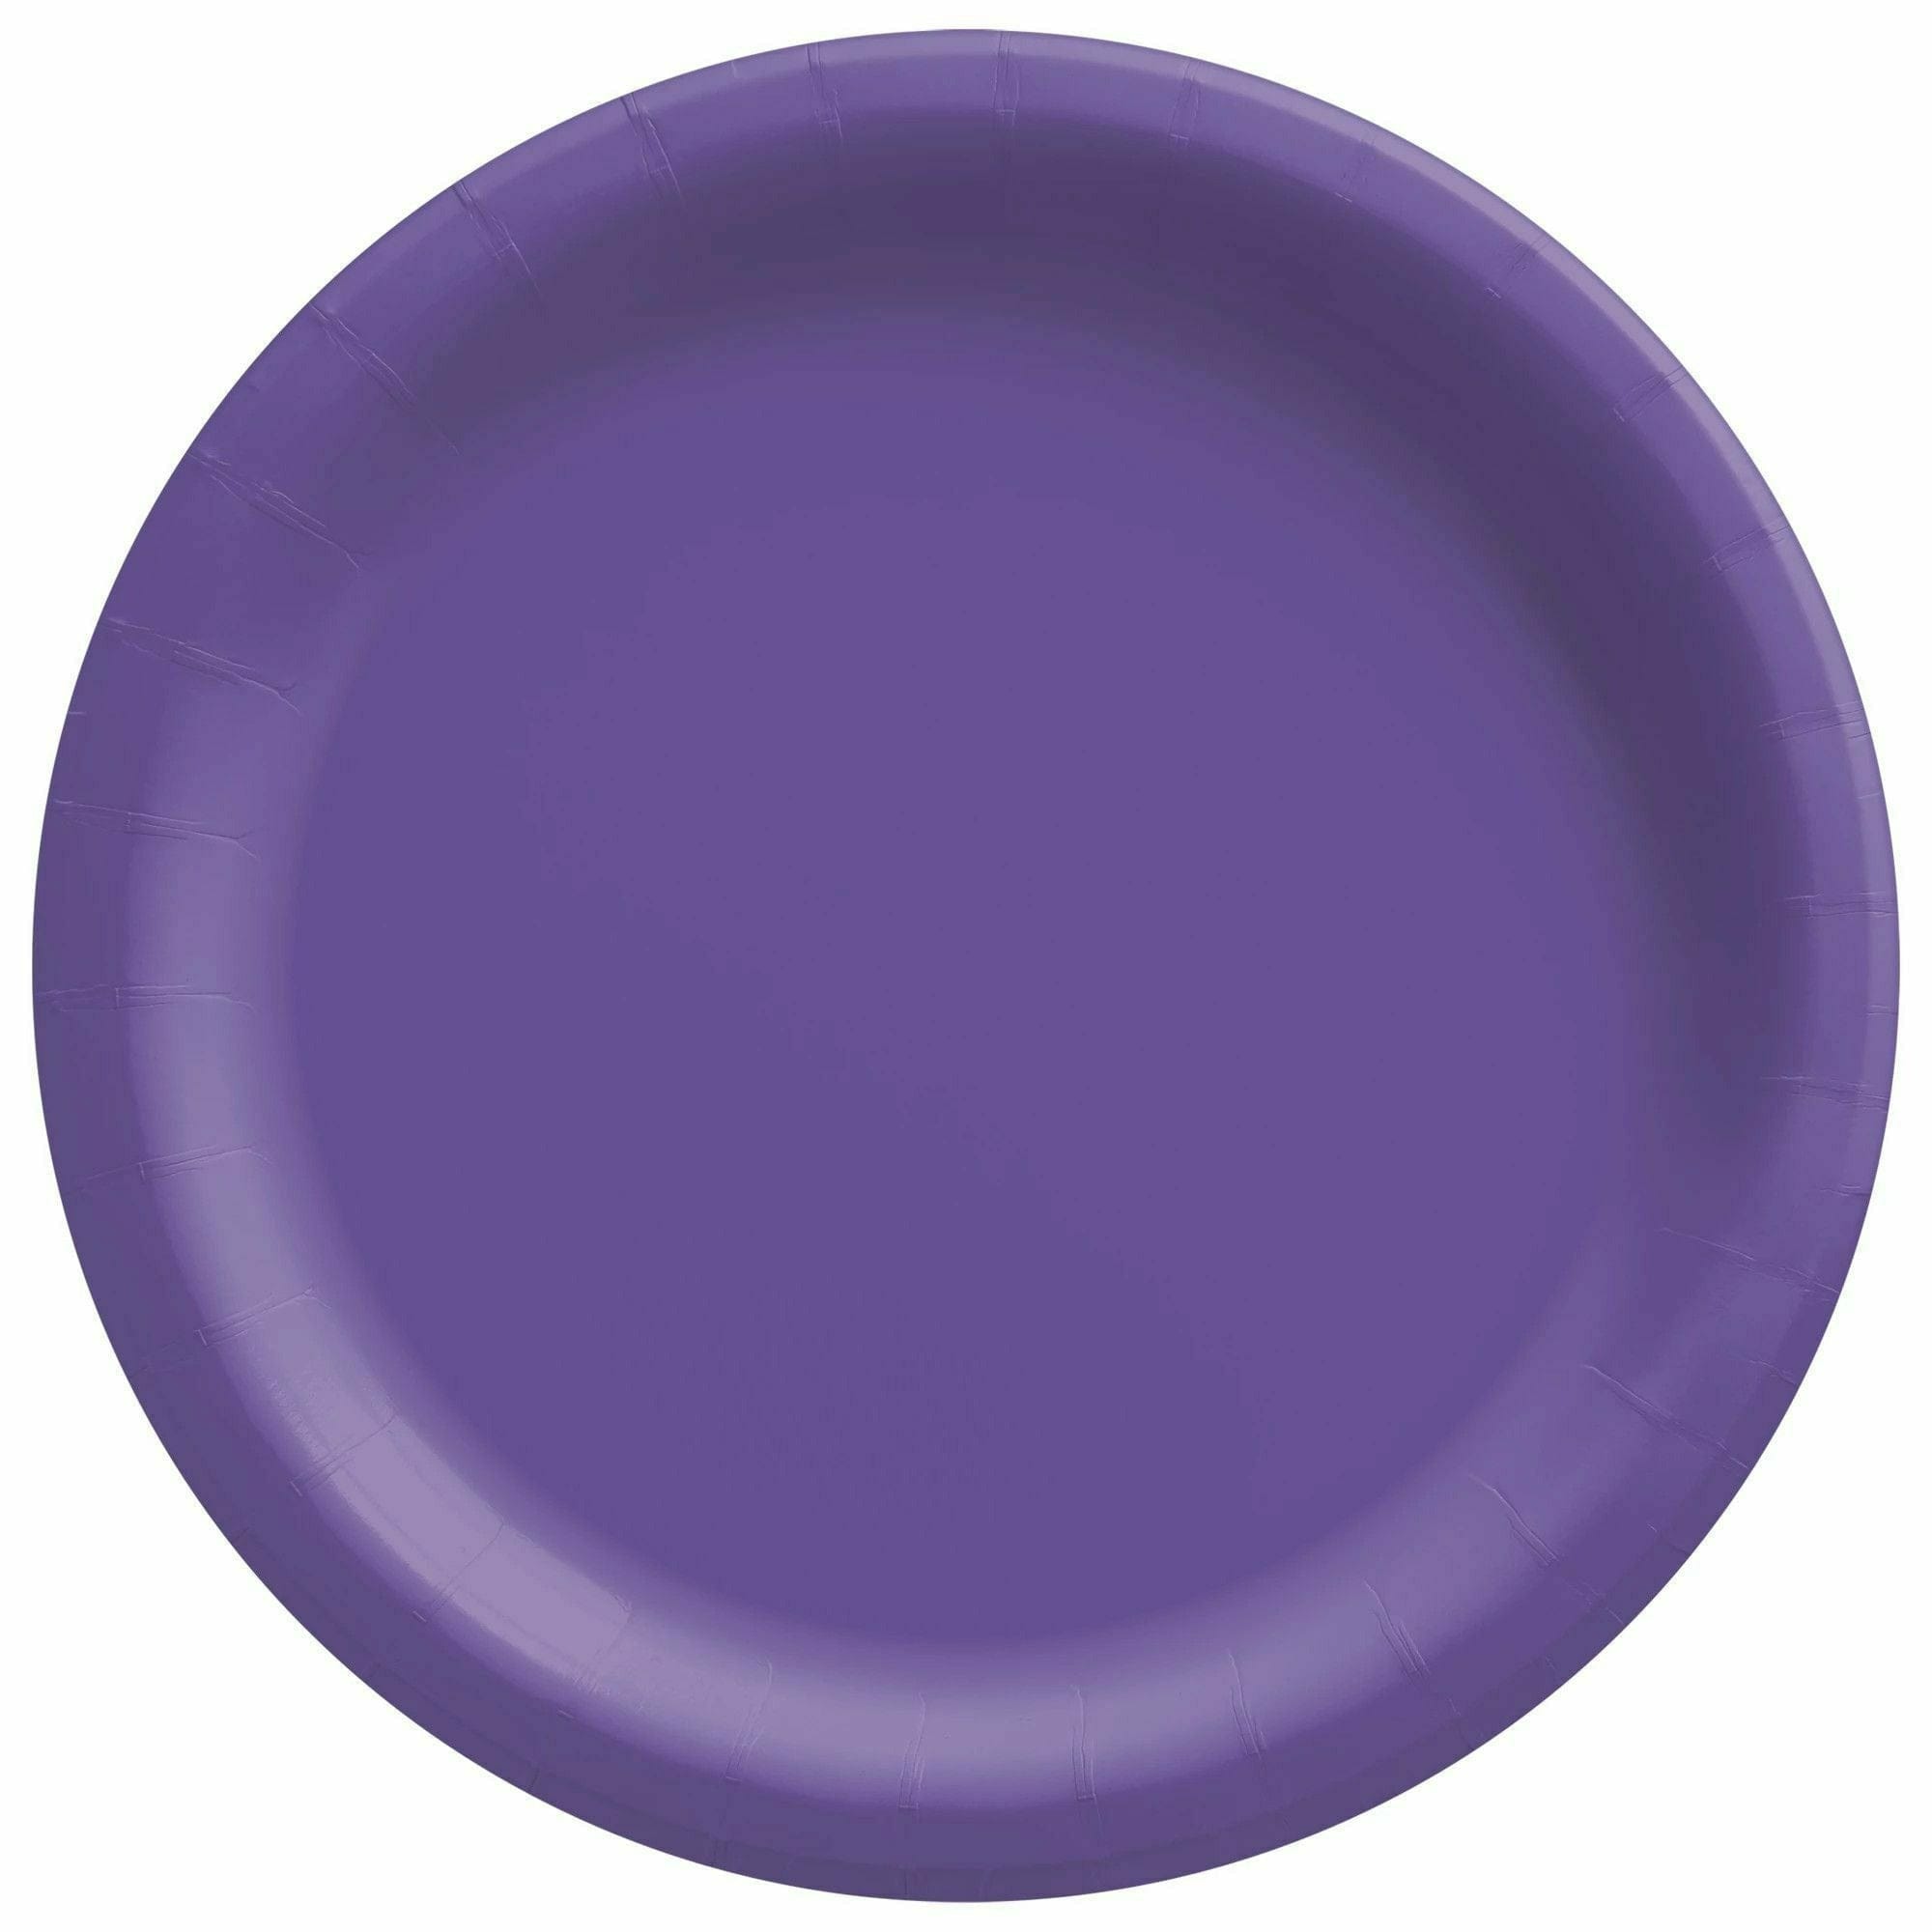 Amscan BASIC Purple - 8 1/2" Round Paper Plates, 20 Ct.